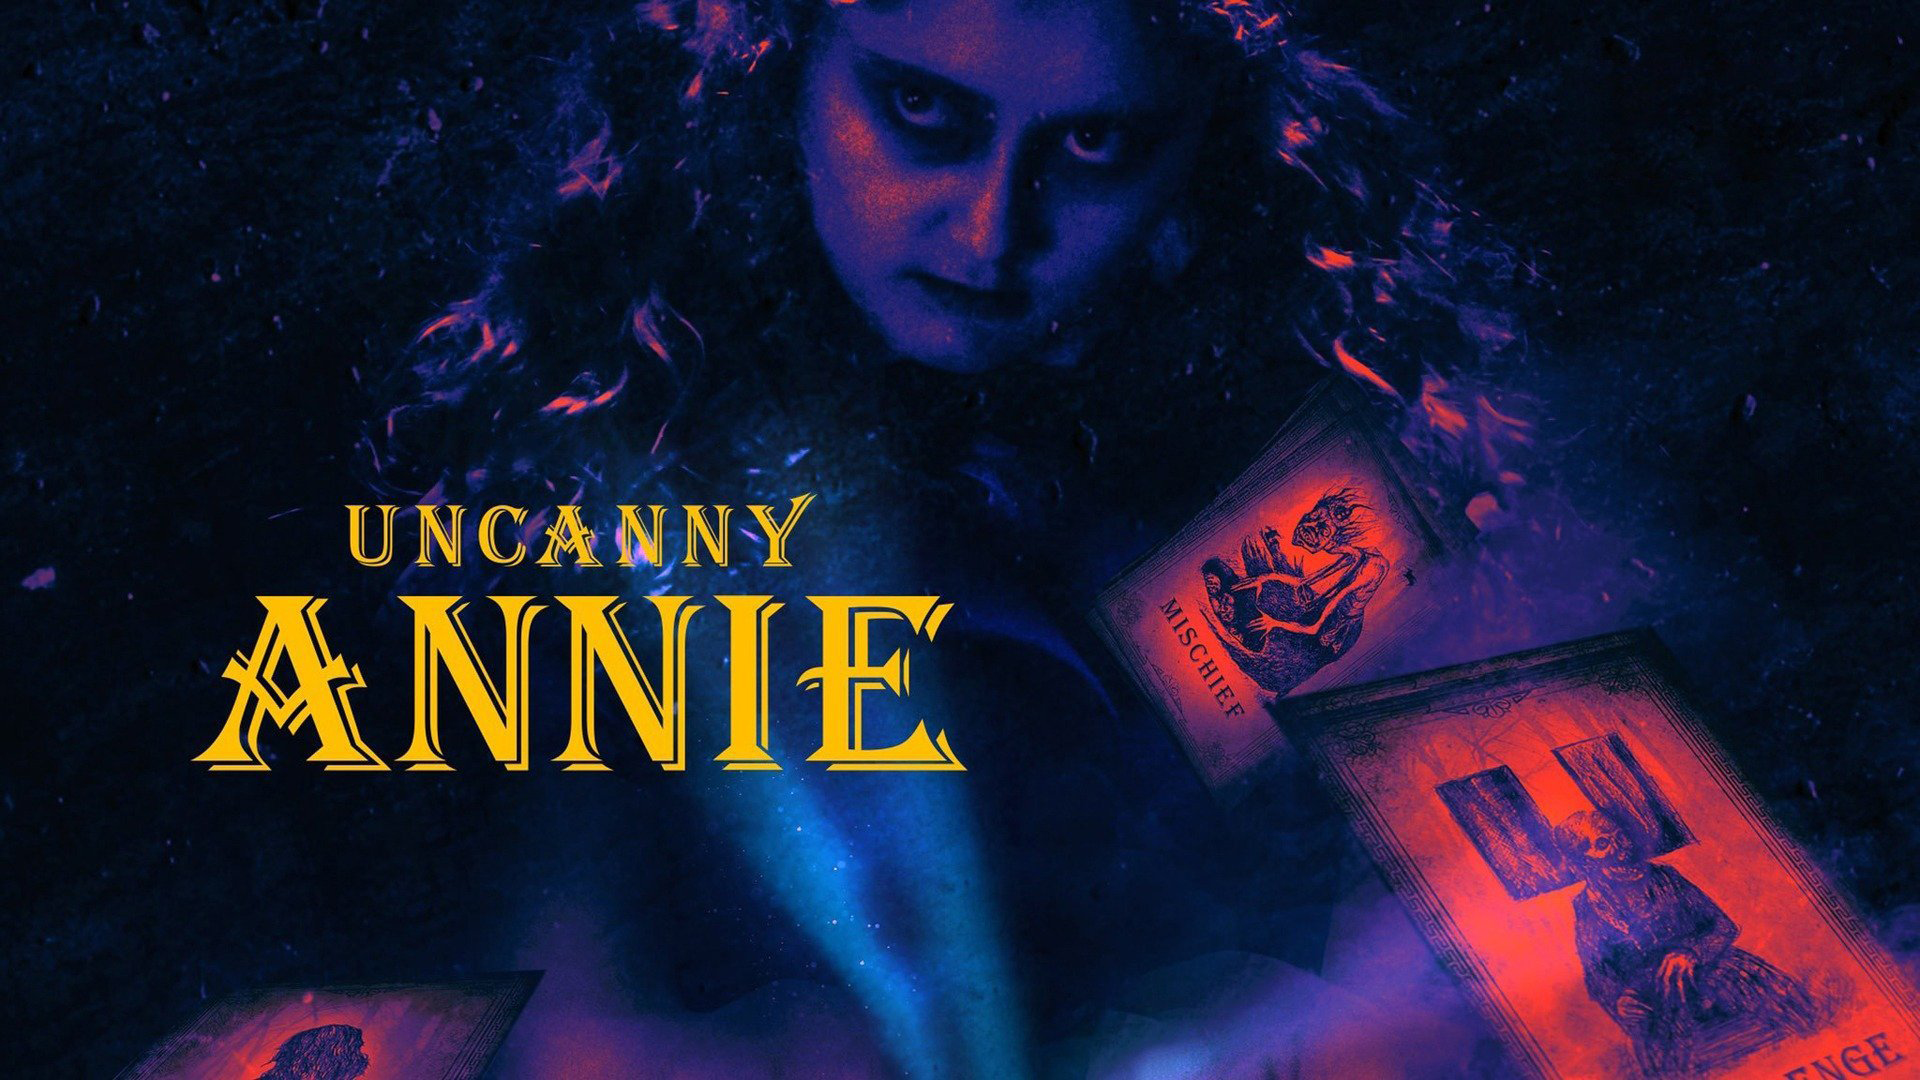 Into The Dark: Uncanny Annie